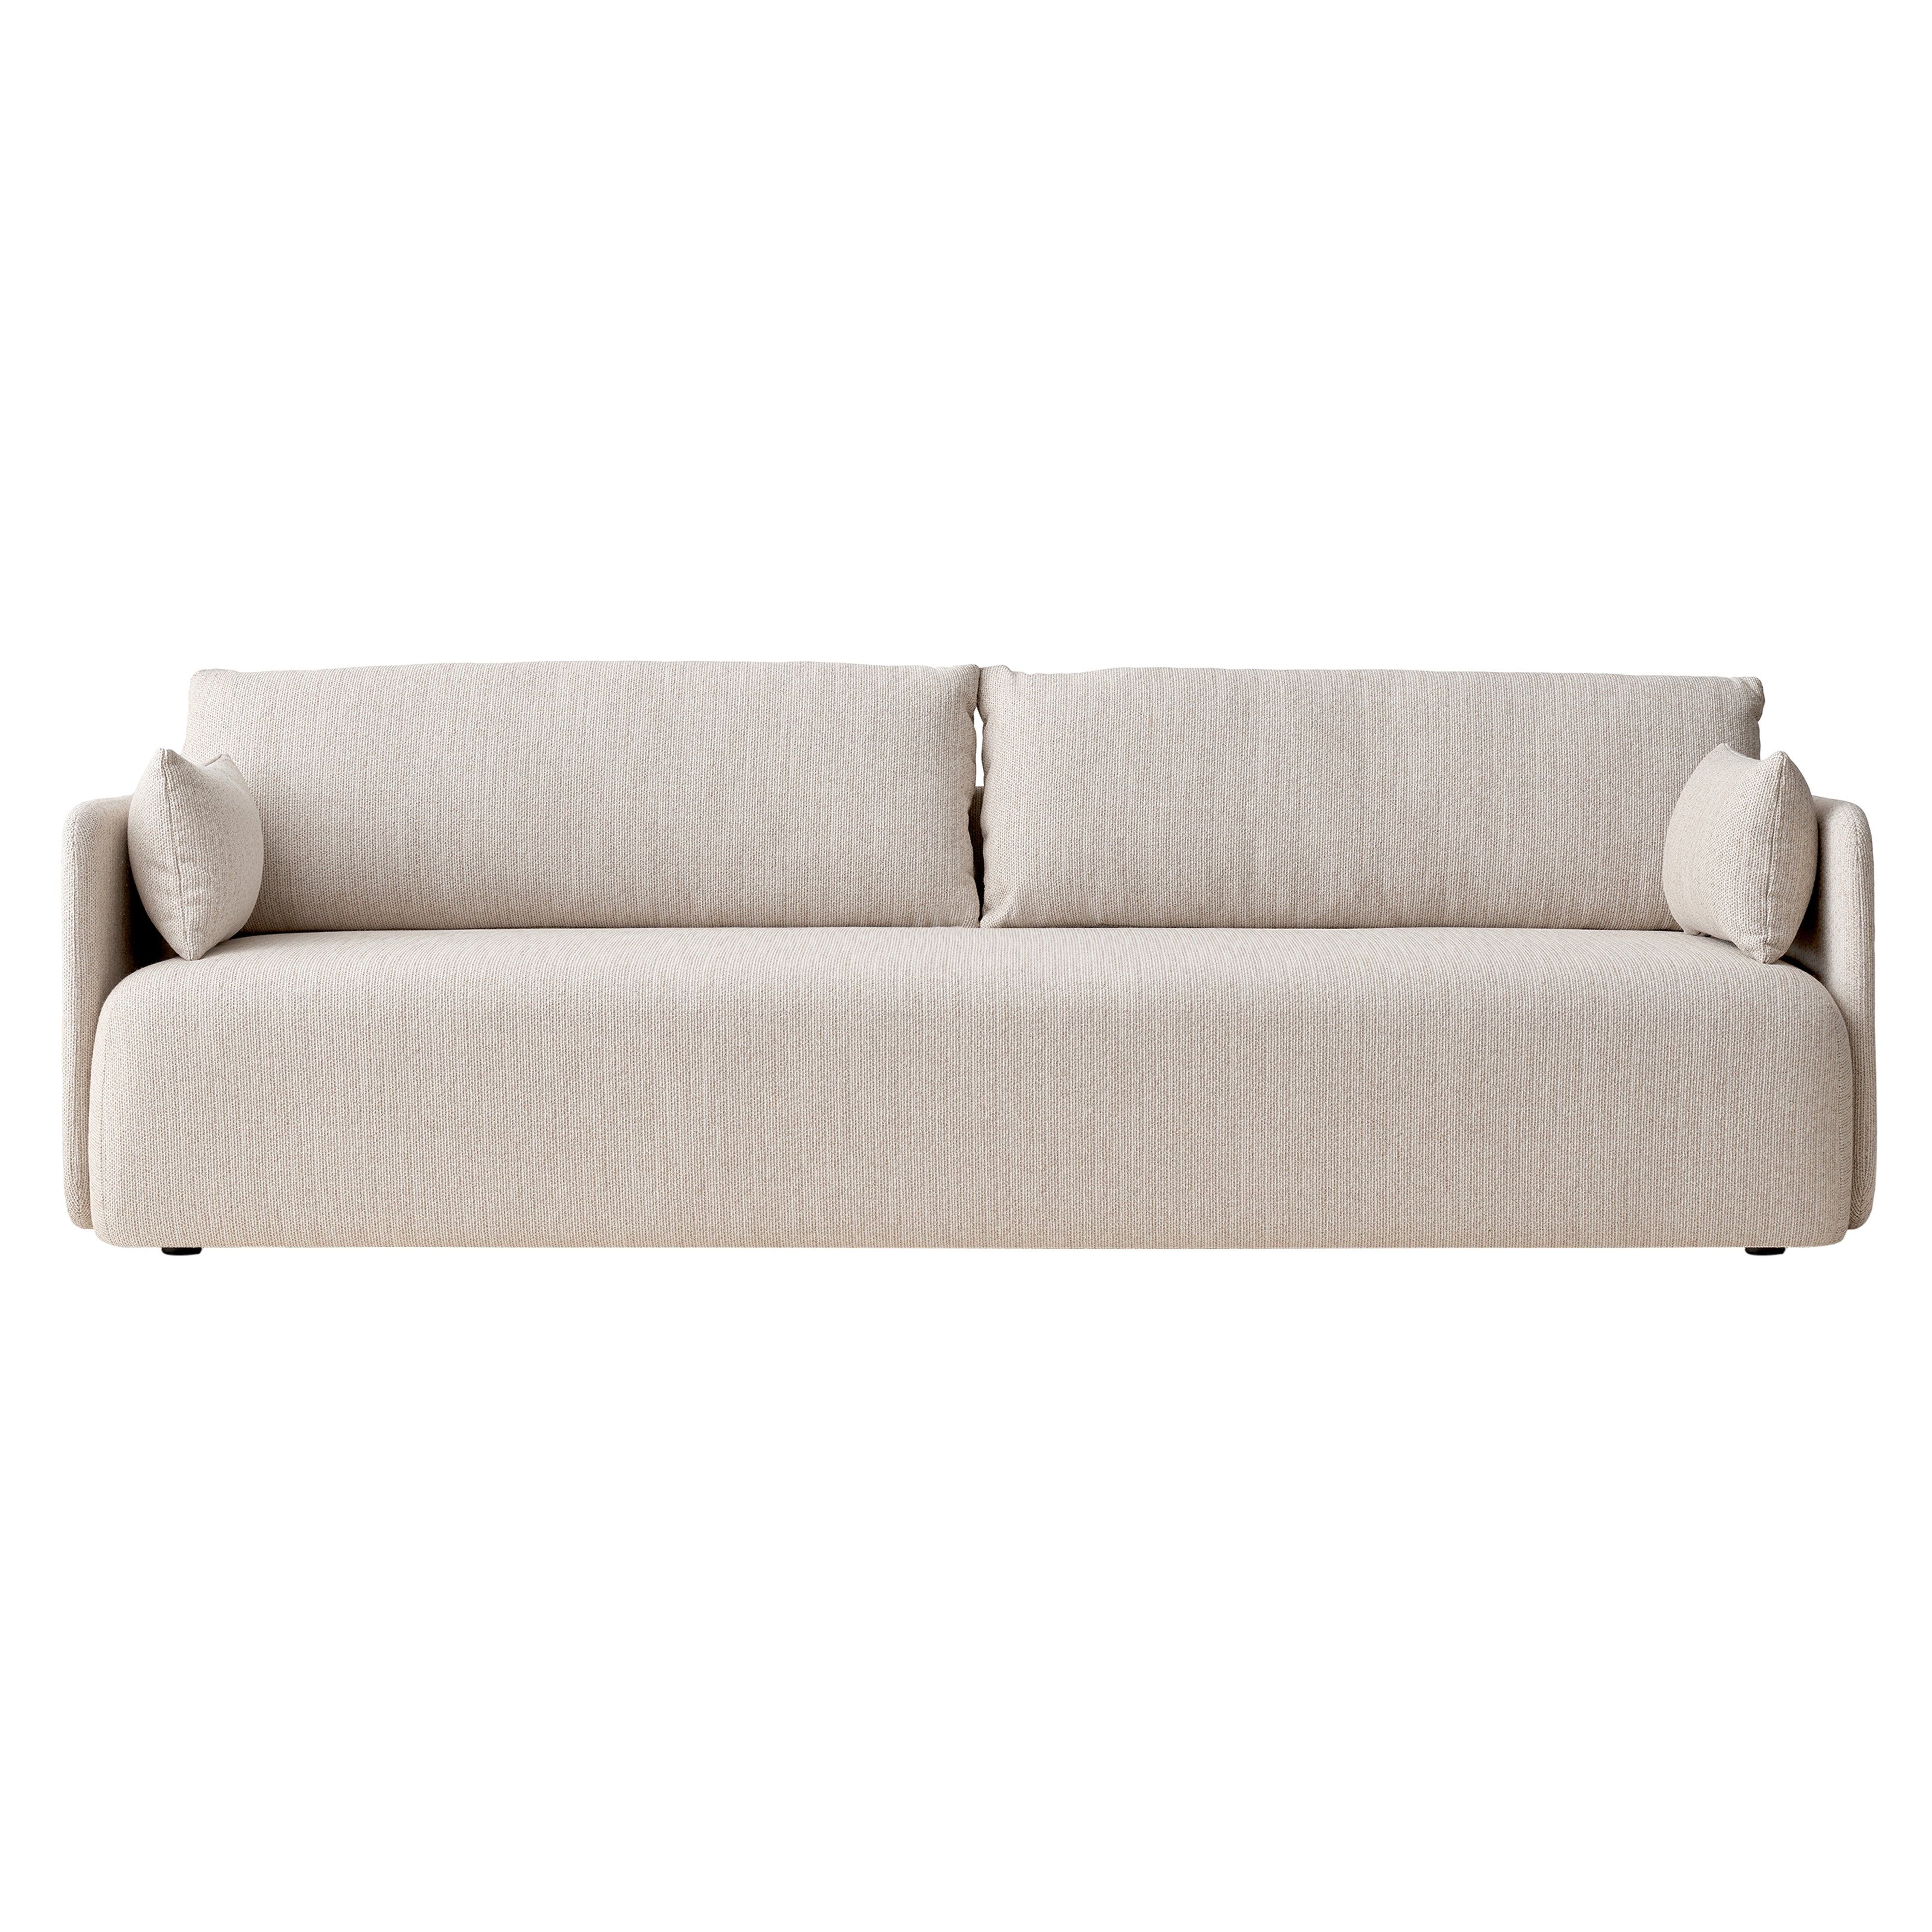 Offset Sofa: 3 + Savanna 202